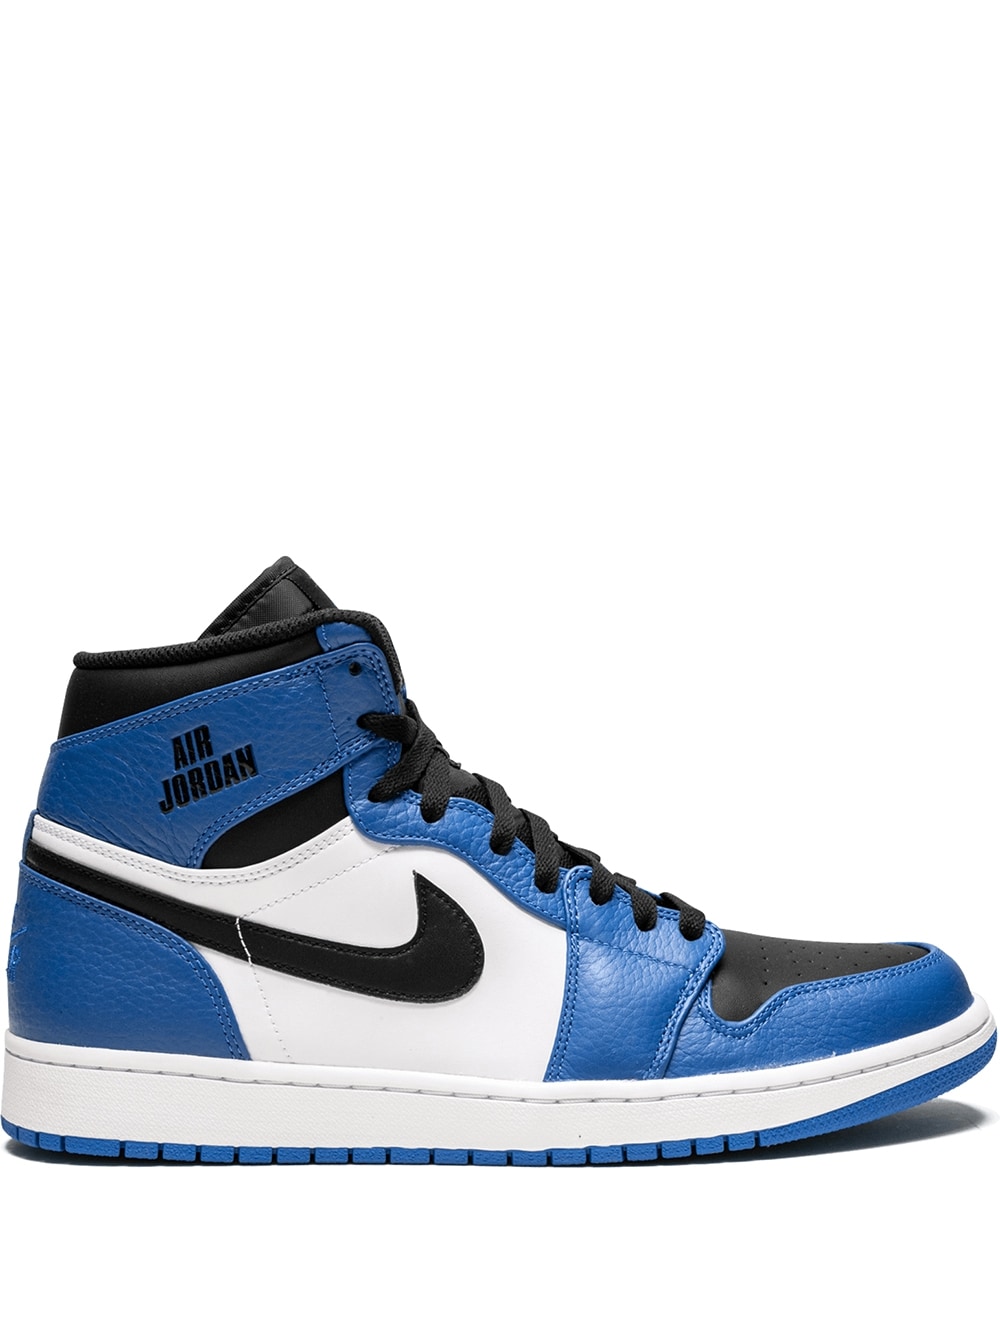 Jordan Air Jordan 1 Retro High sneakers - Blue